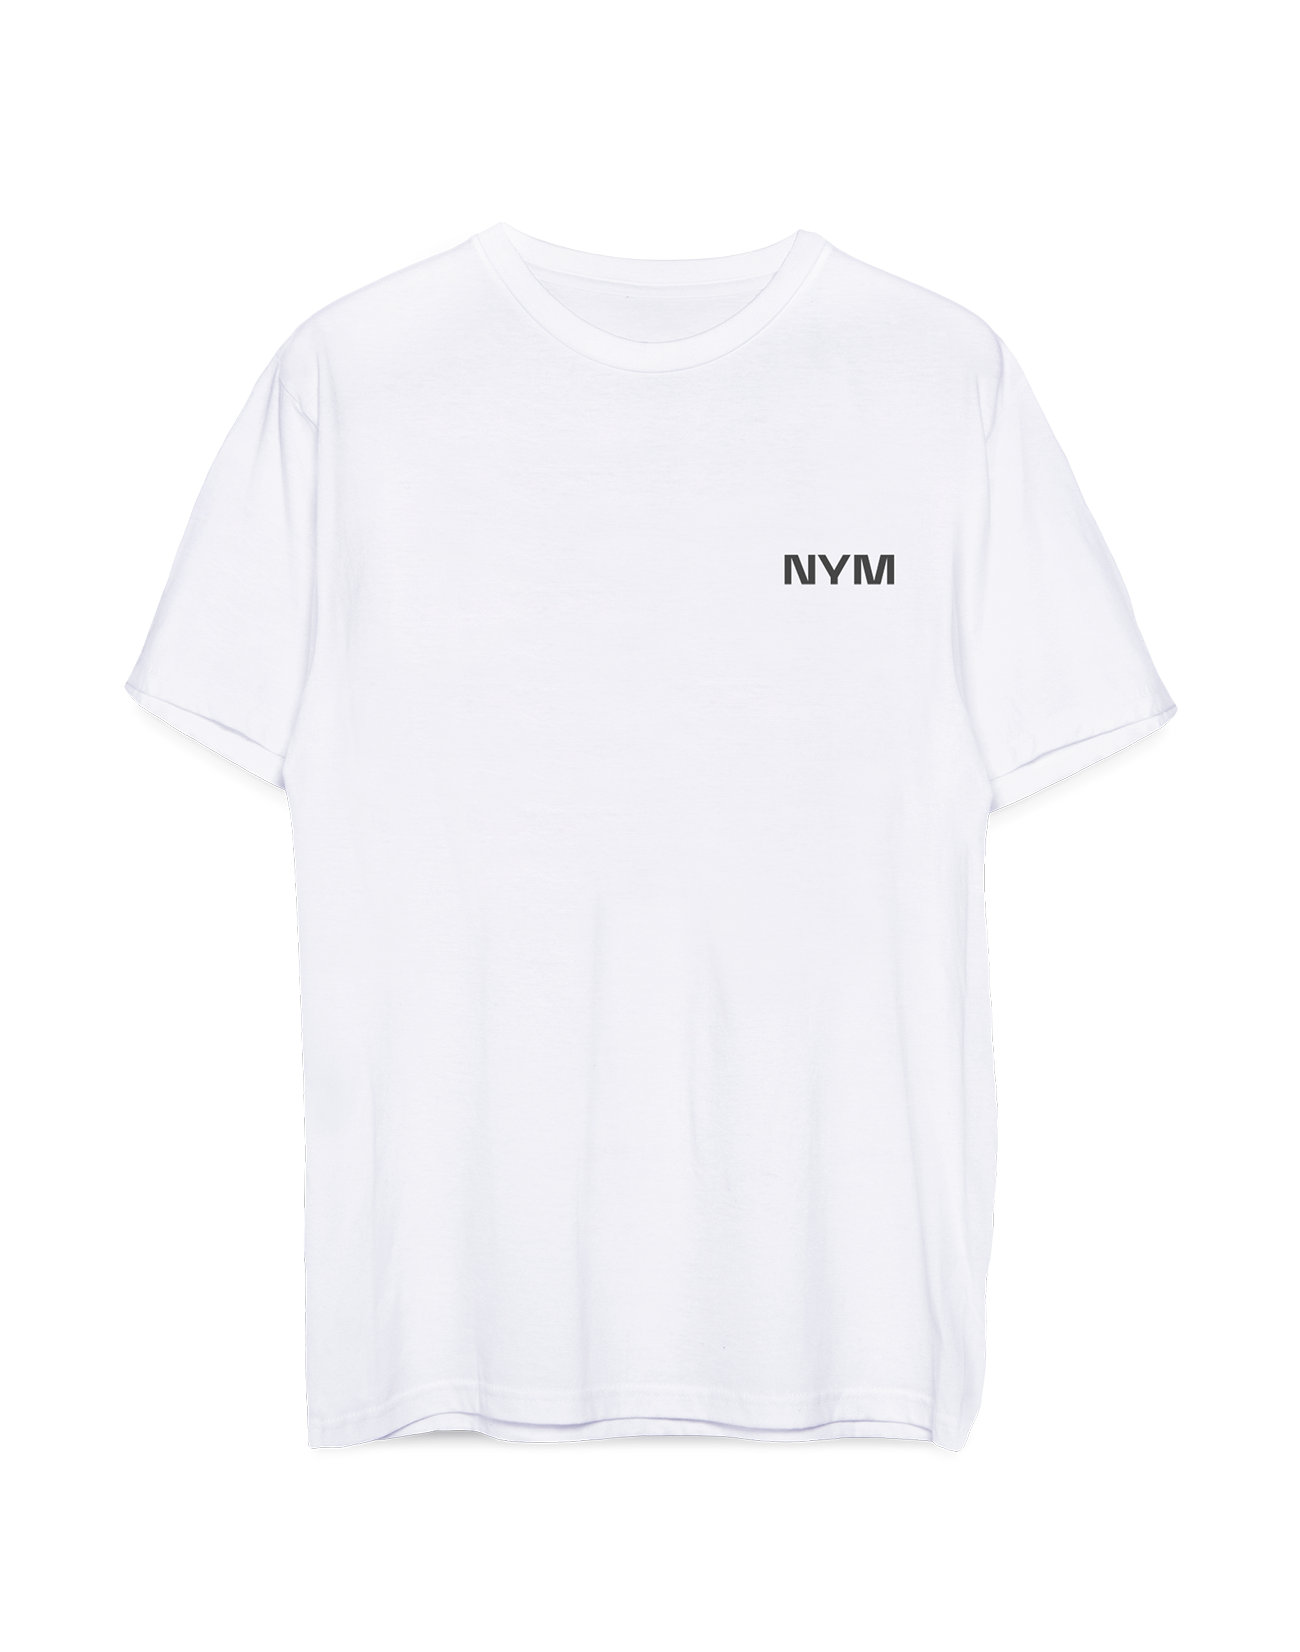 The Mixnet white unisex t-shirt